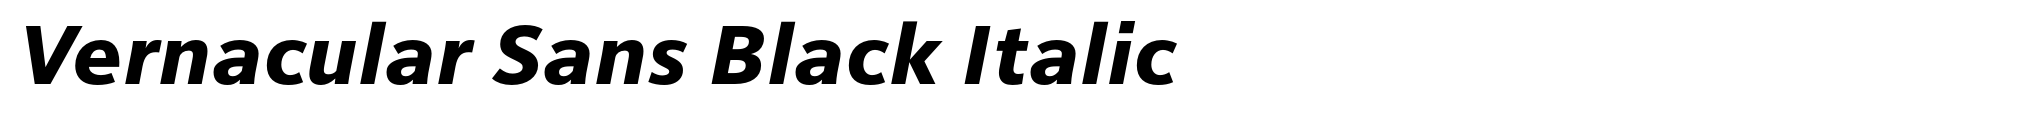 Vernacular Sans Black Italic image